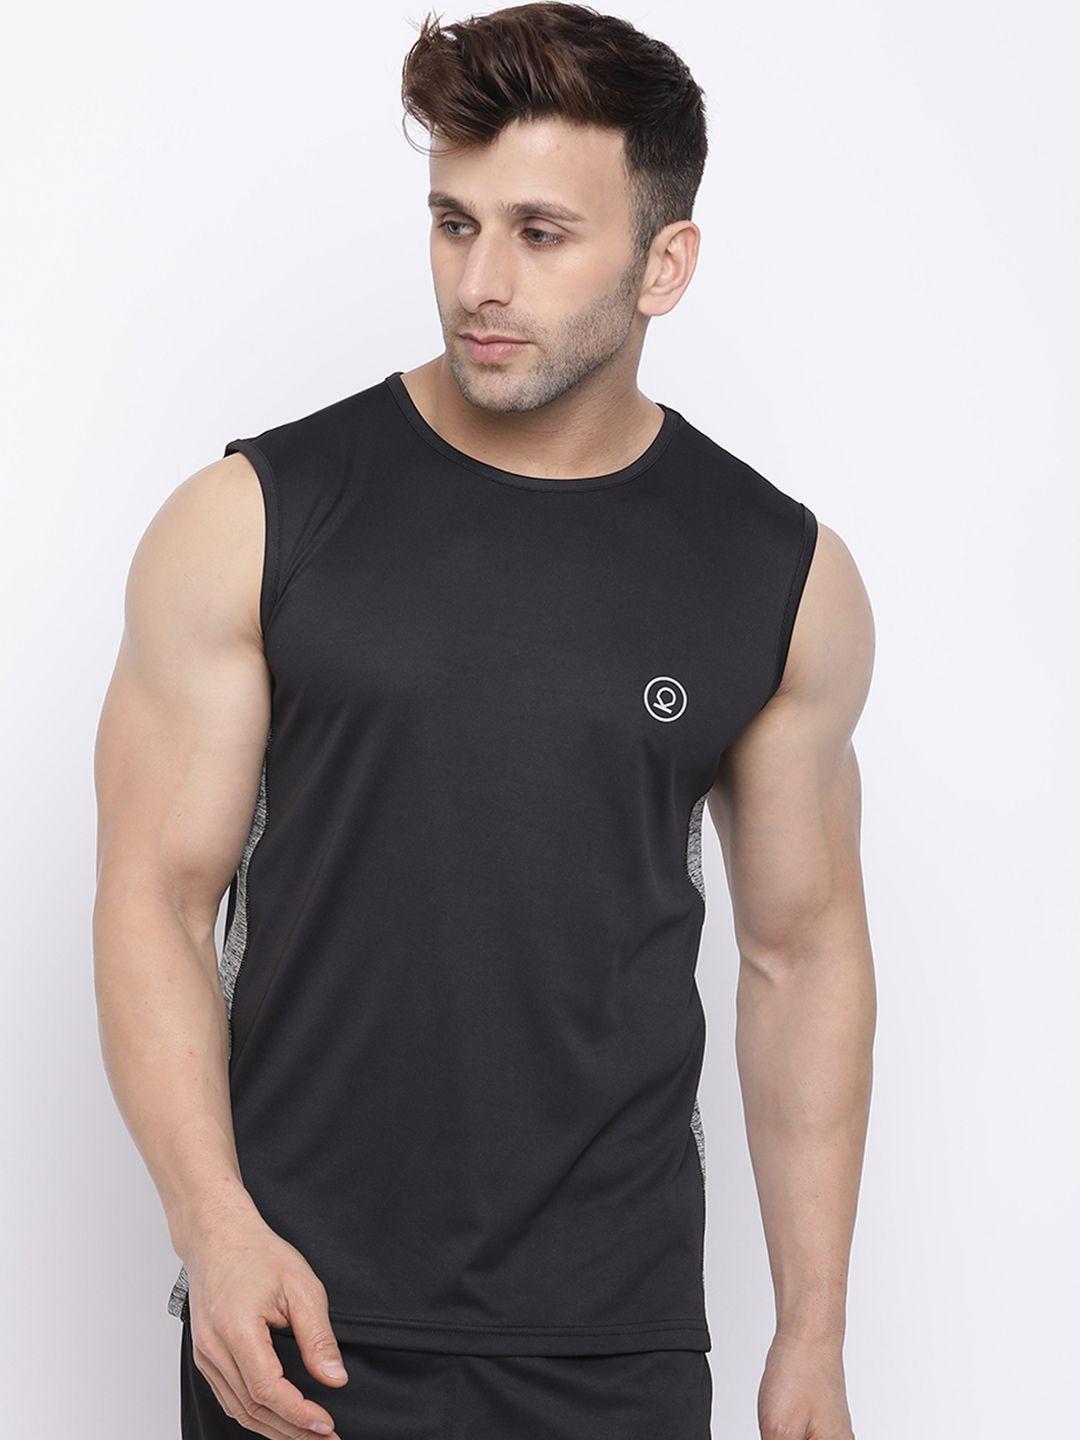 chkokko men grey & black colourblocked dri-fit round neck t-shirt